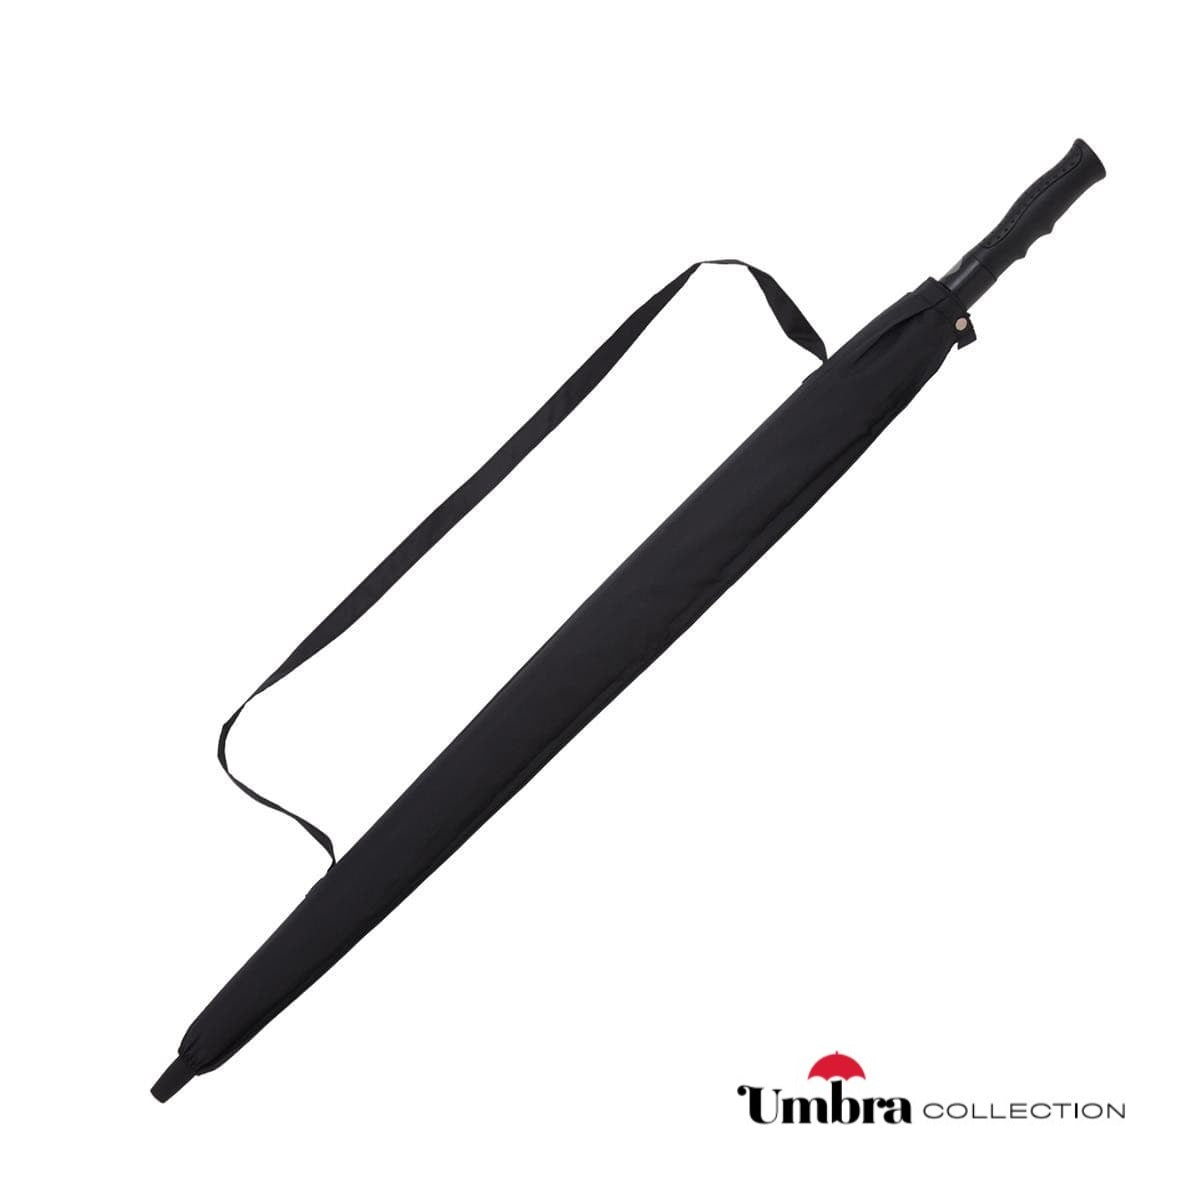 Umbra®️-ultimate-heavy-duty-storm-proof-umbrella-fibreglass-frame-double-layer-wind-vent-system-auto-open-black-3